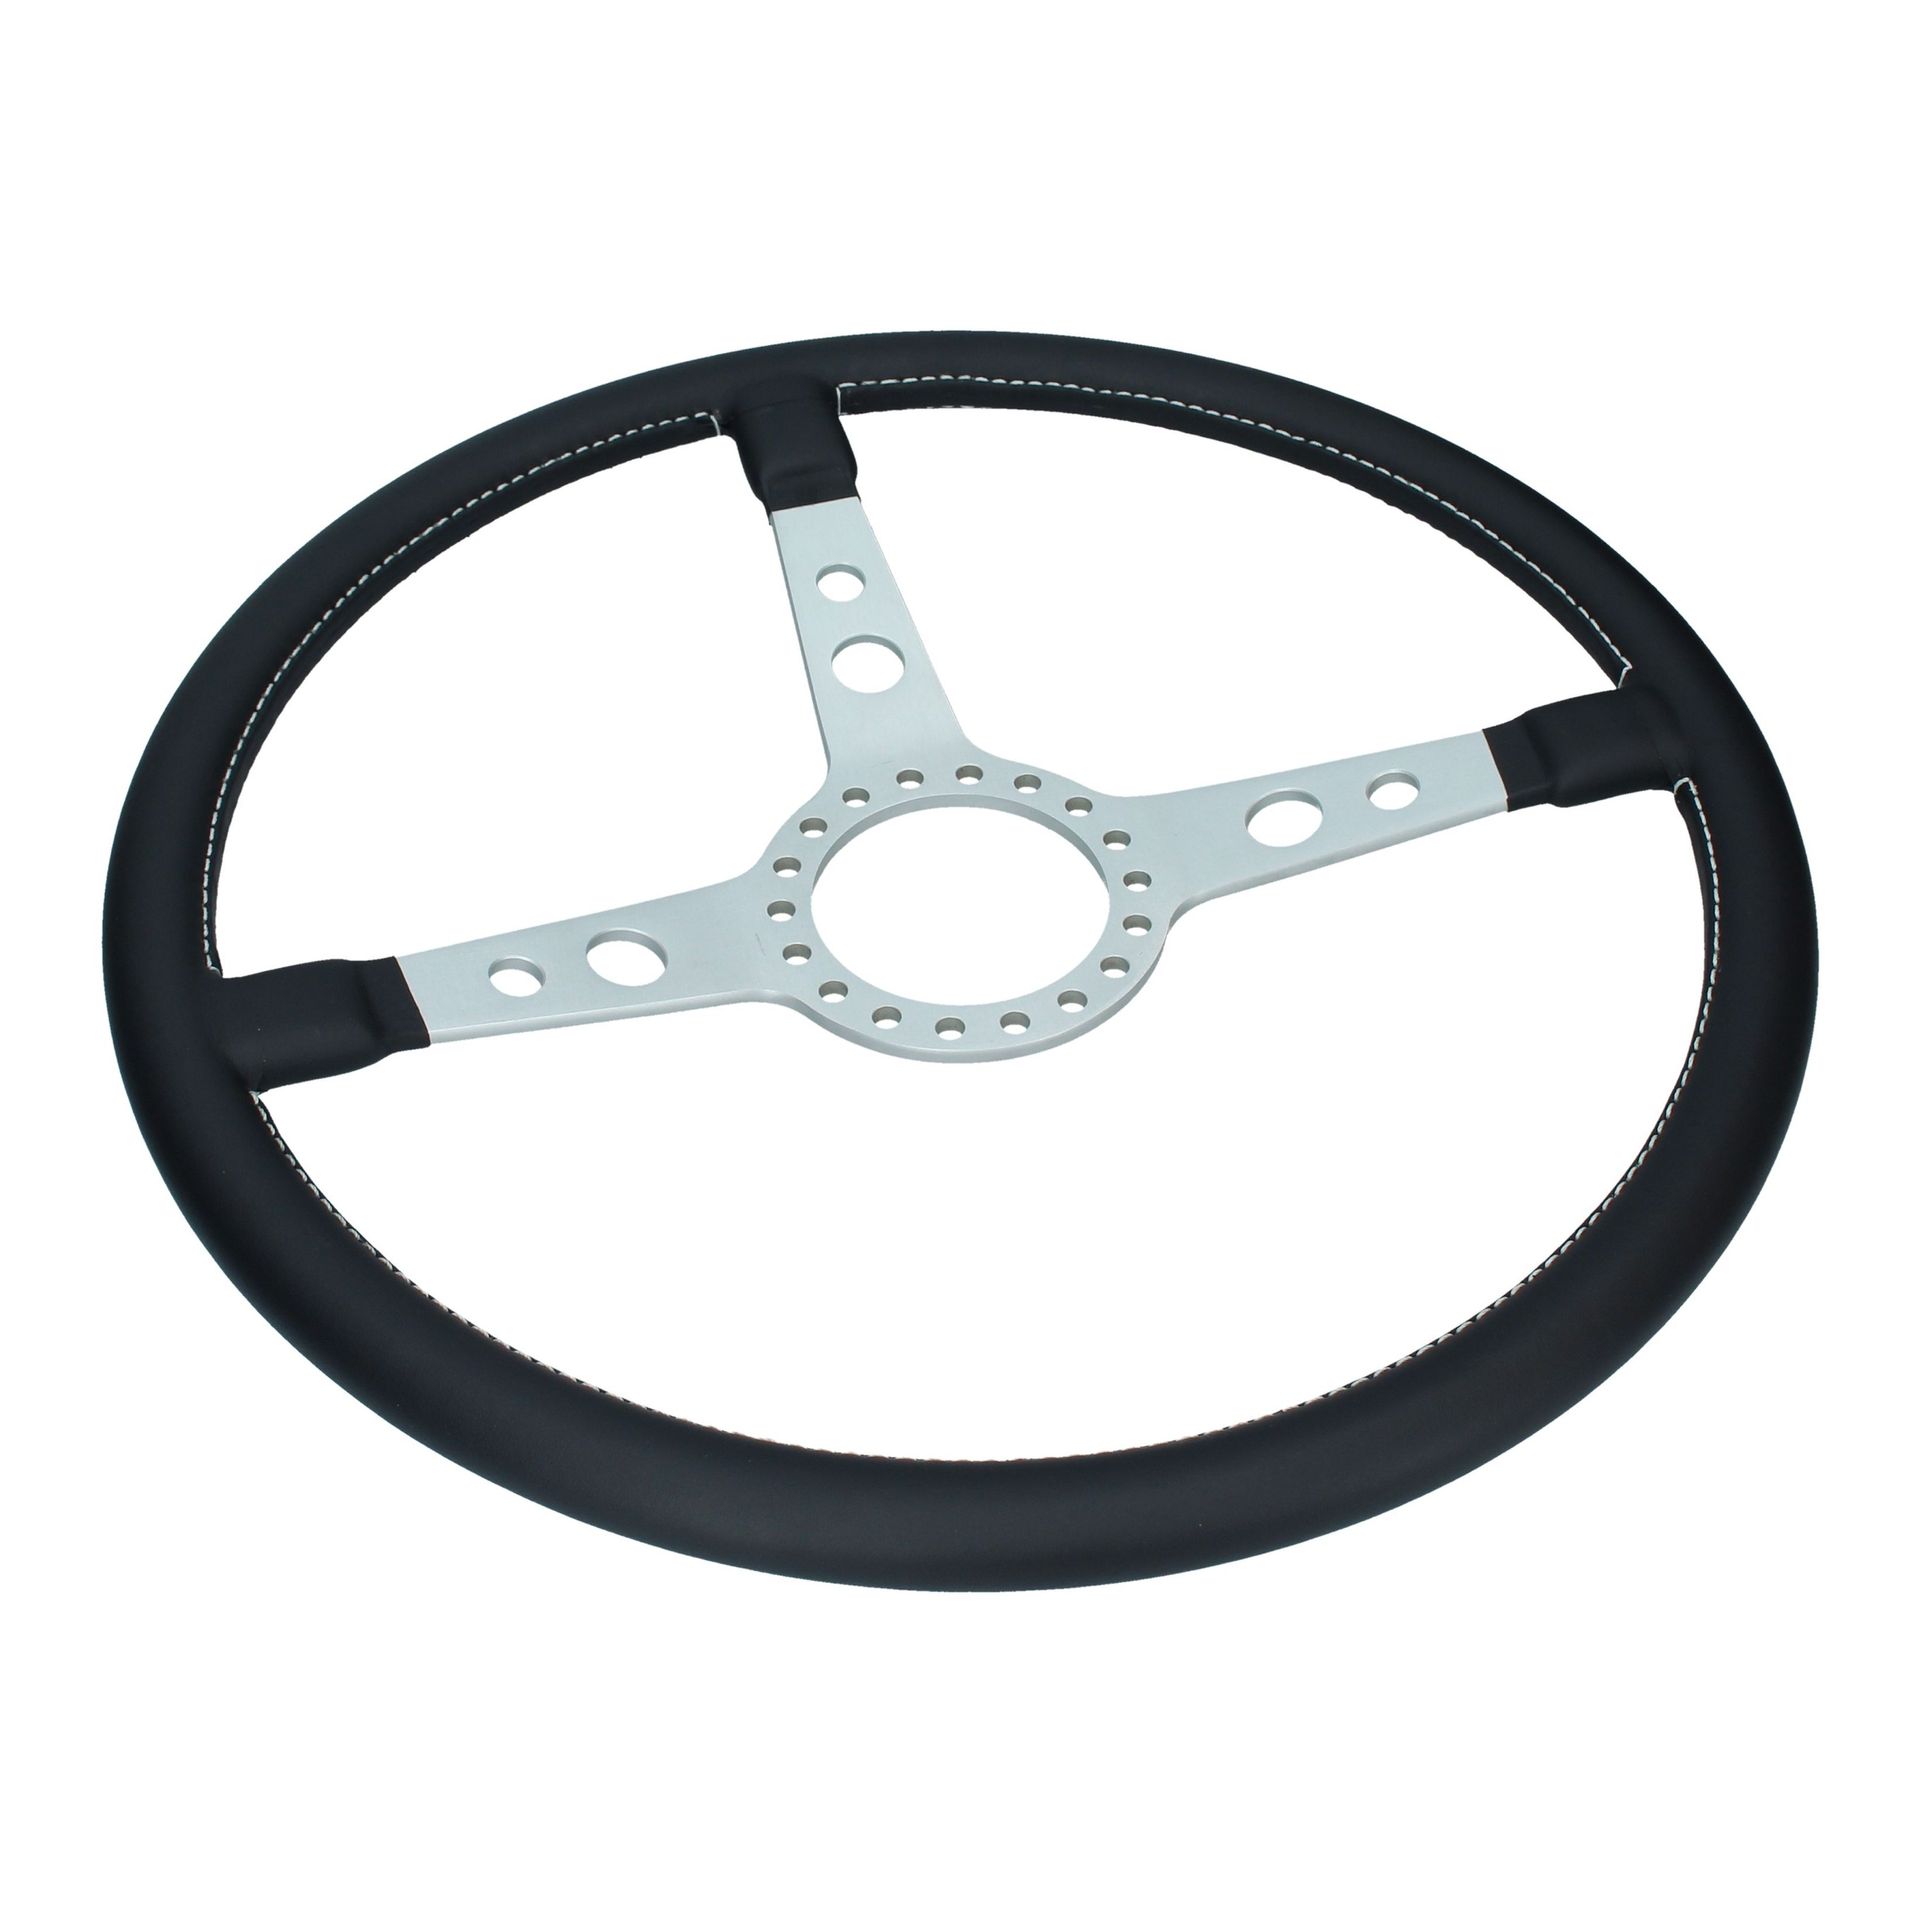 Steering Wheel 365 GTB/4 Daytona